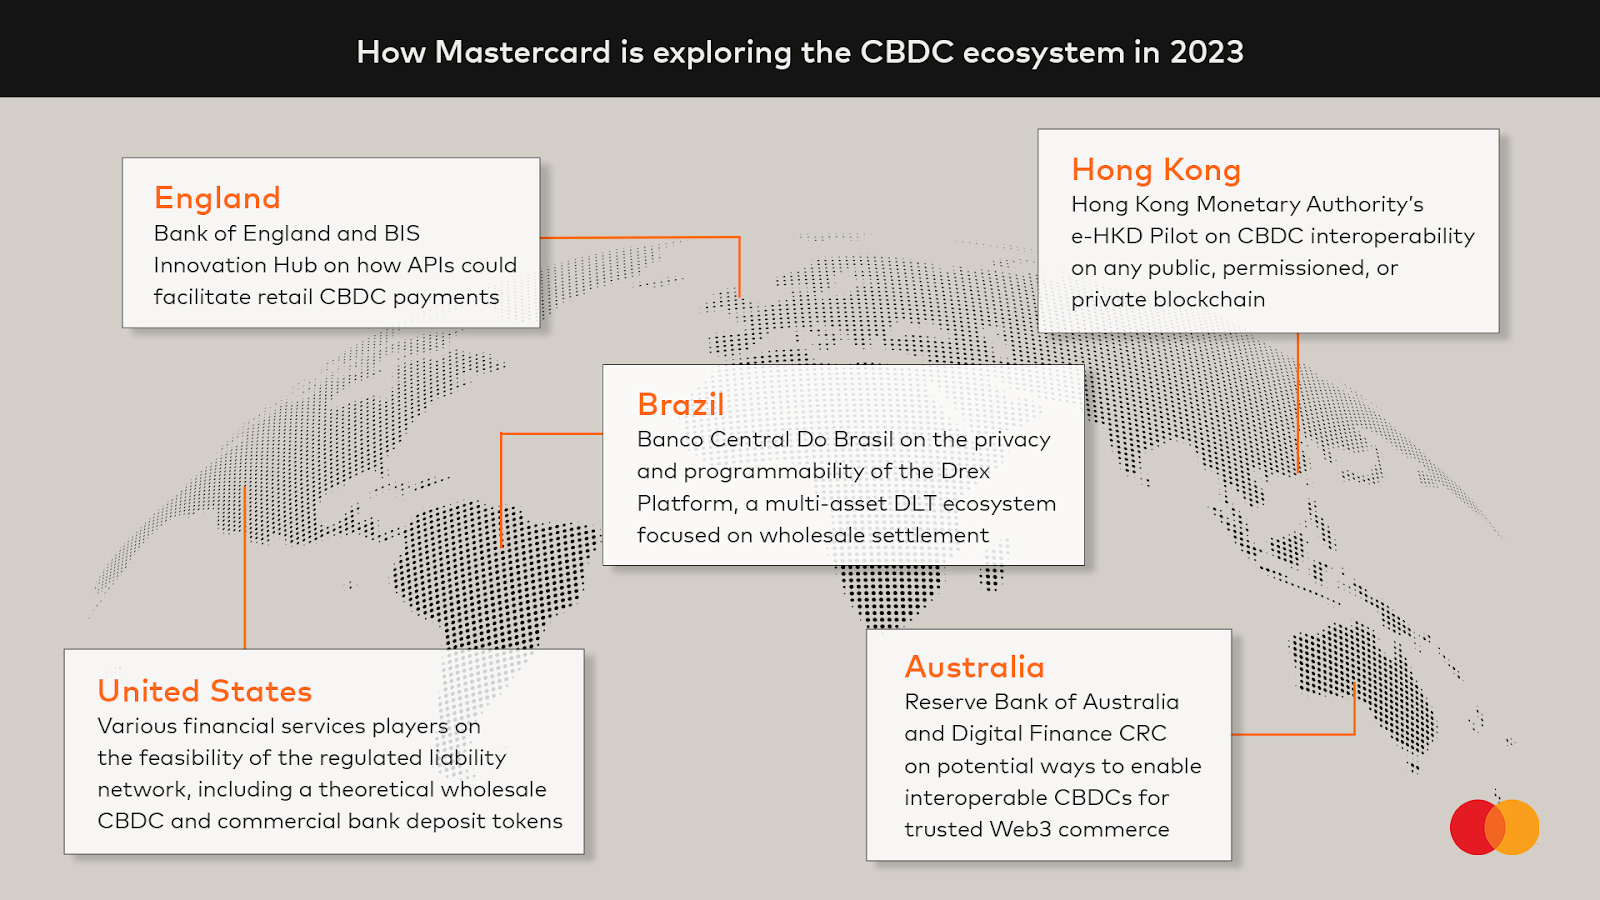 Mastercard’s Plans For CBDCs In 2023, Source: Mastercard